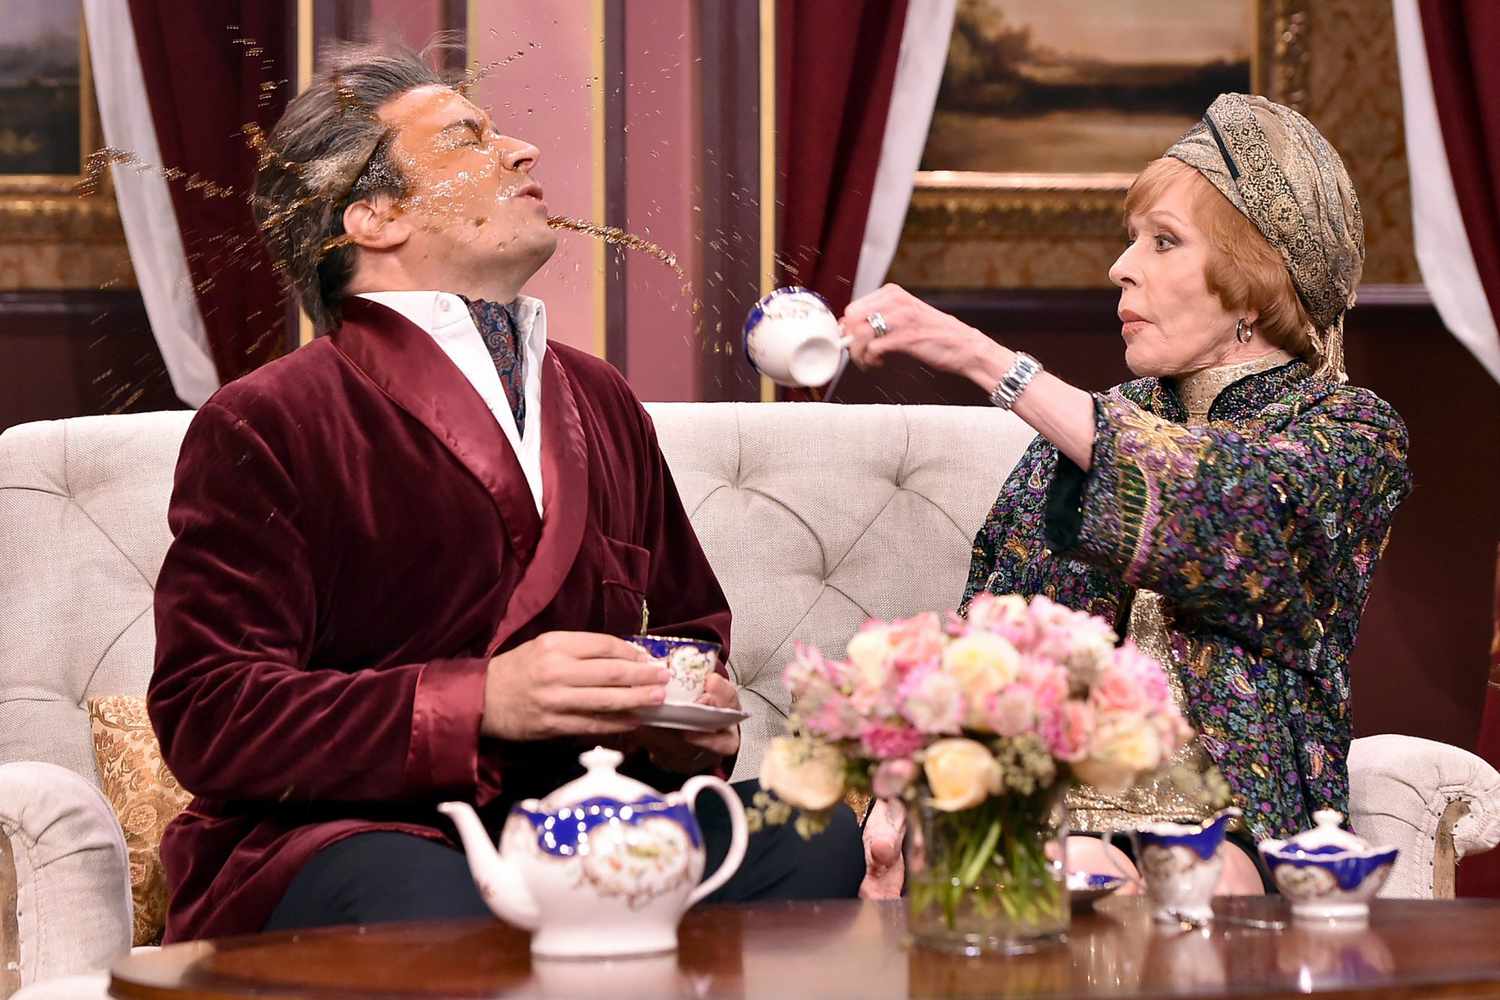 Carol Burnett With Jimmy Fallon on The Tonight Show Starring Jimmy Fallon&nbsp;in New York City&nbsp;on October 6, 2014